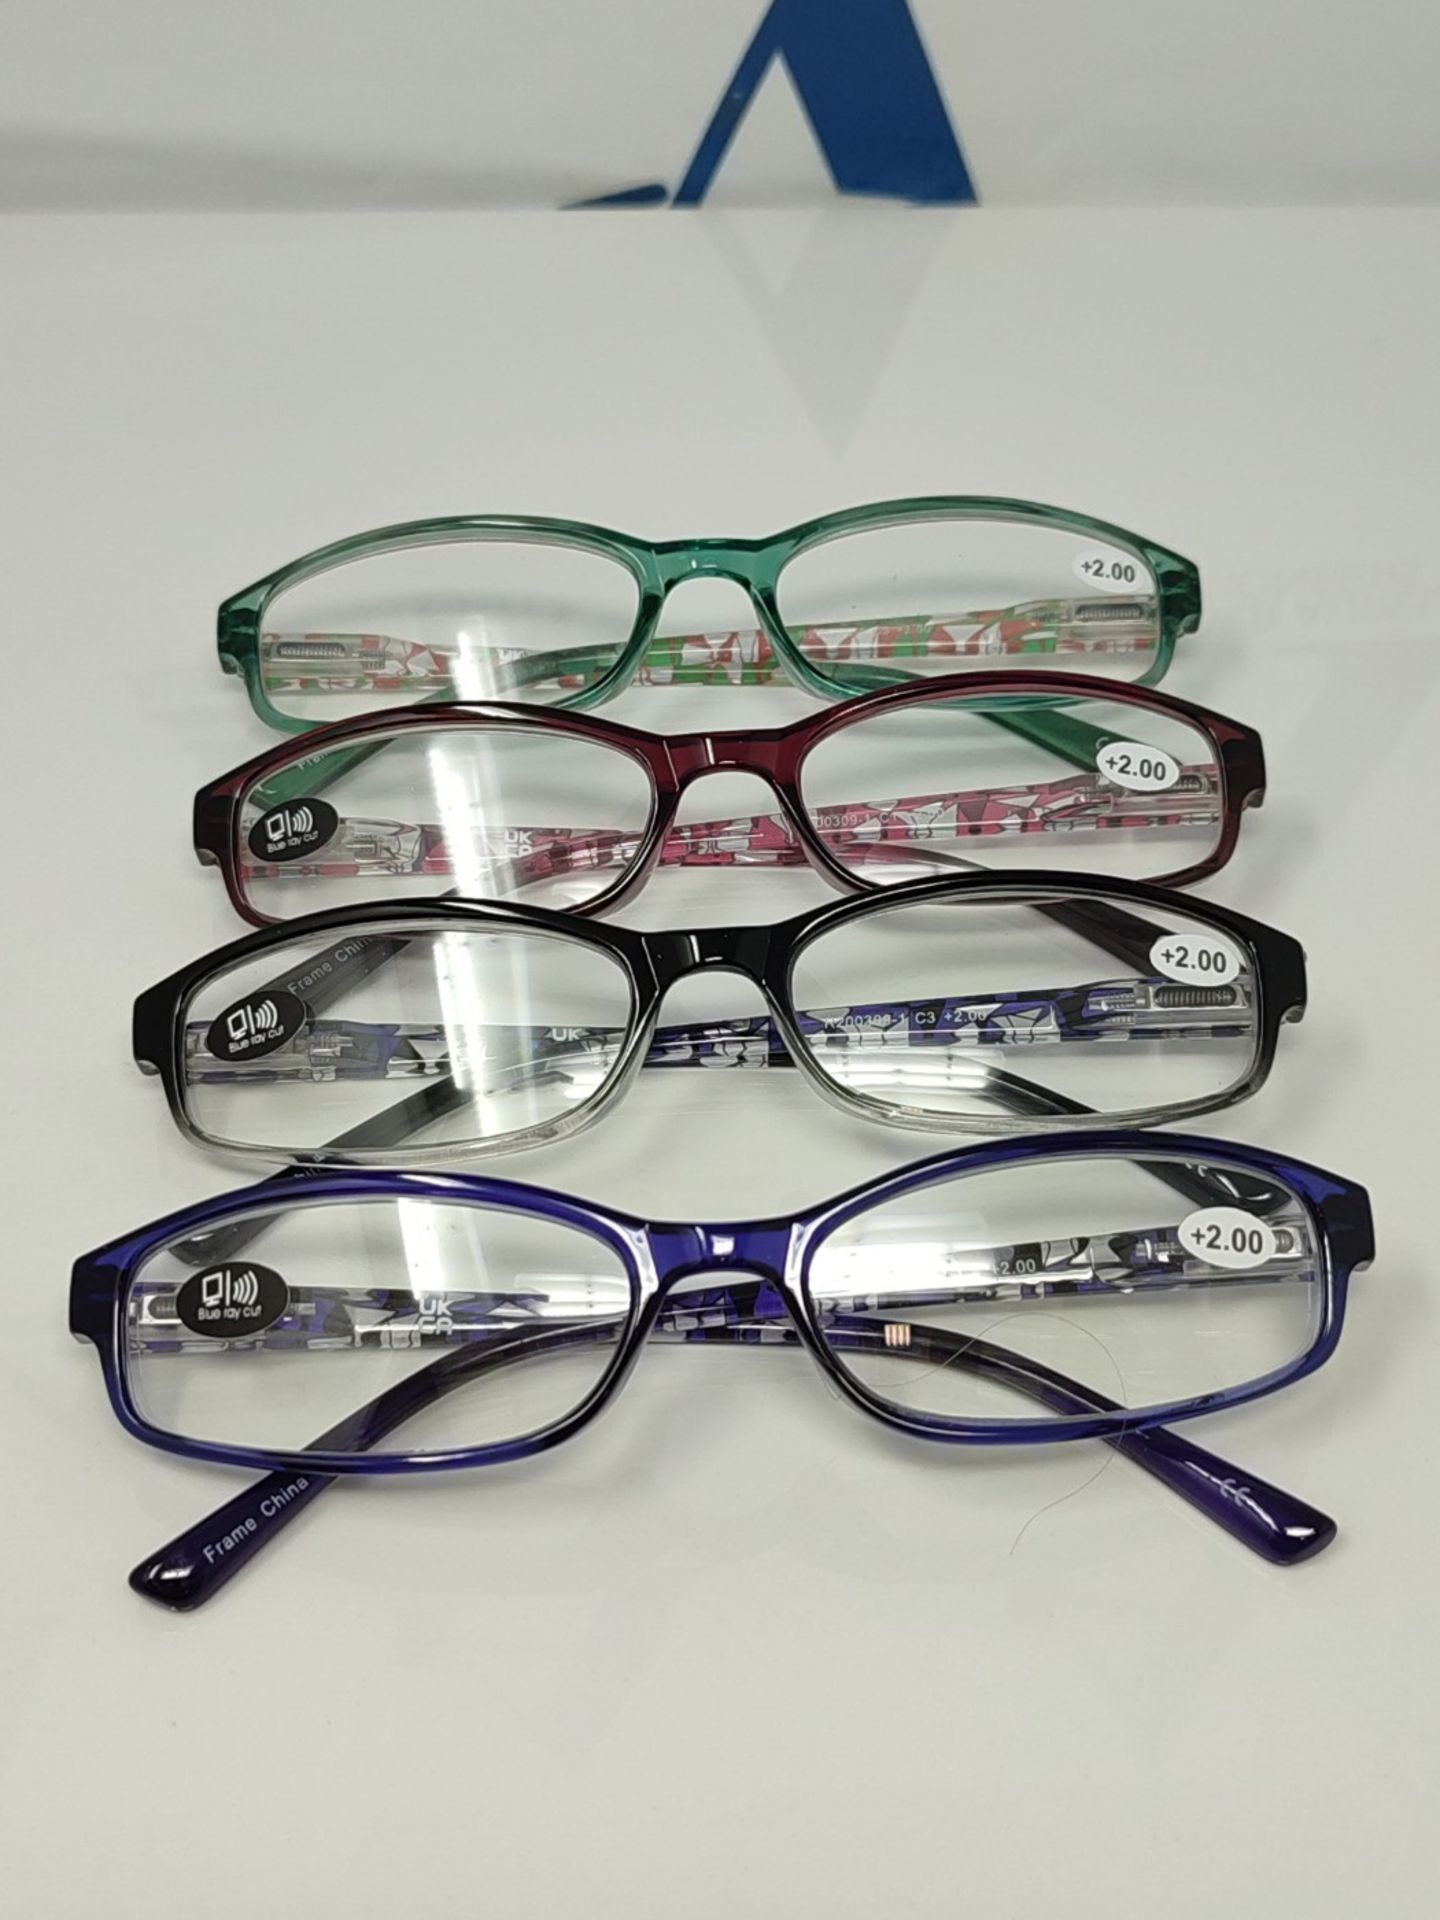 BOSAIL 4 Pack Reading Glasses Blue Light Blocking,Fashion Ladies Spring Hinge Readers - Image 3 of 3